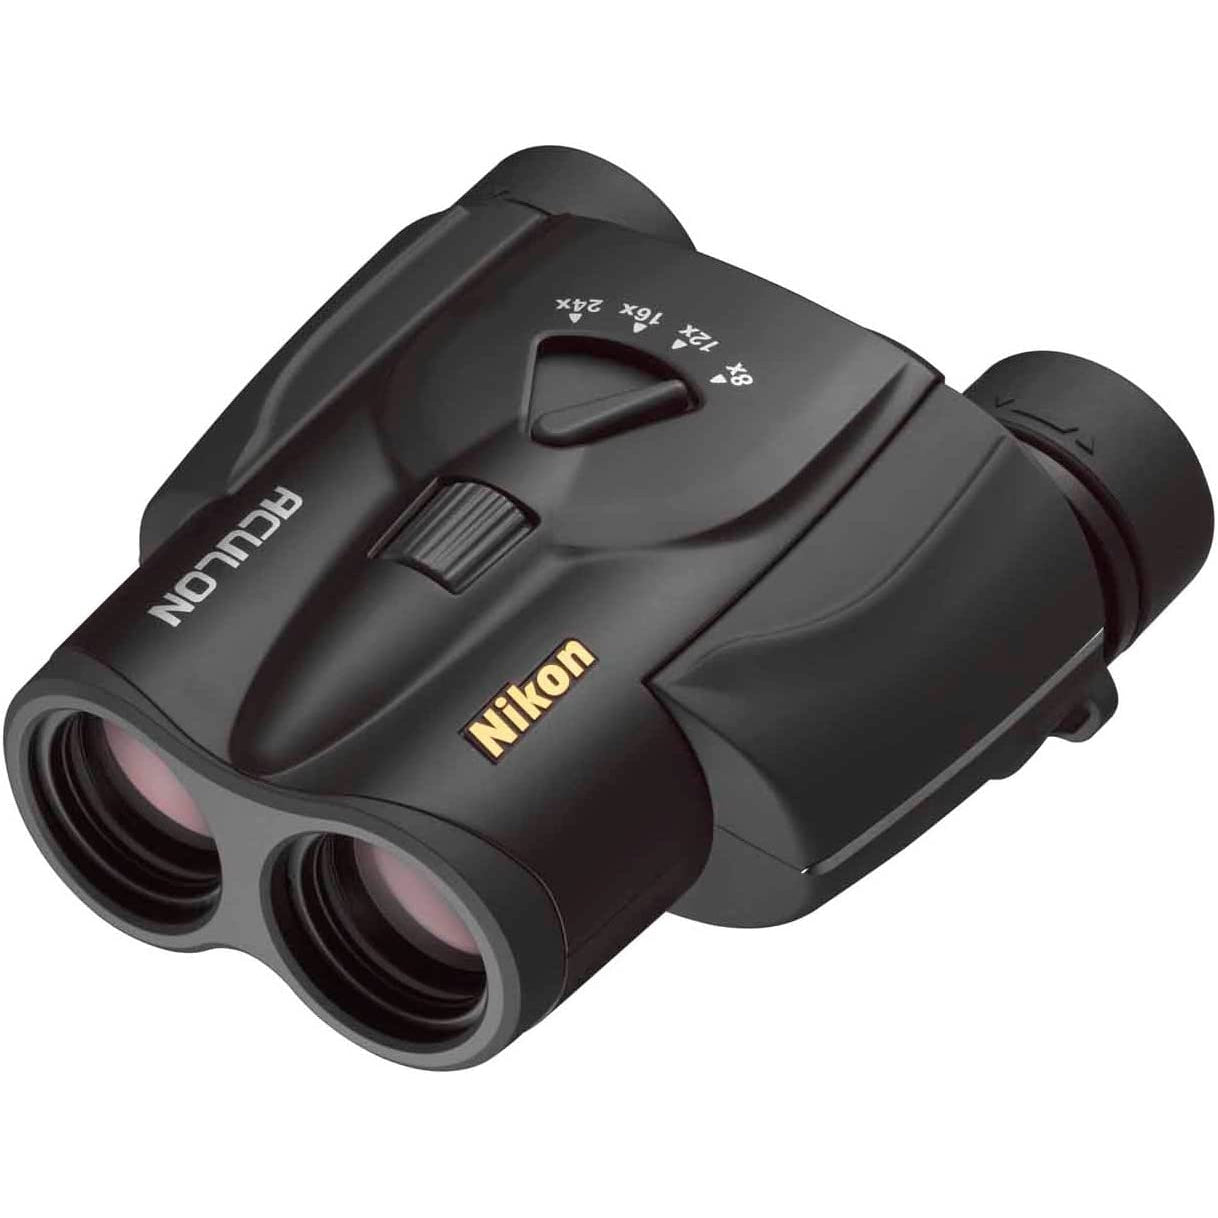 Nikon Aculon T11 8-24x25 Zoom Binoculars, Black